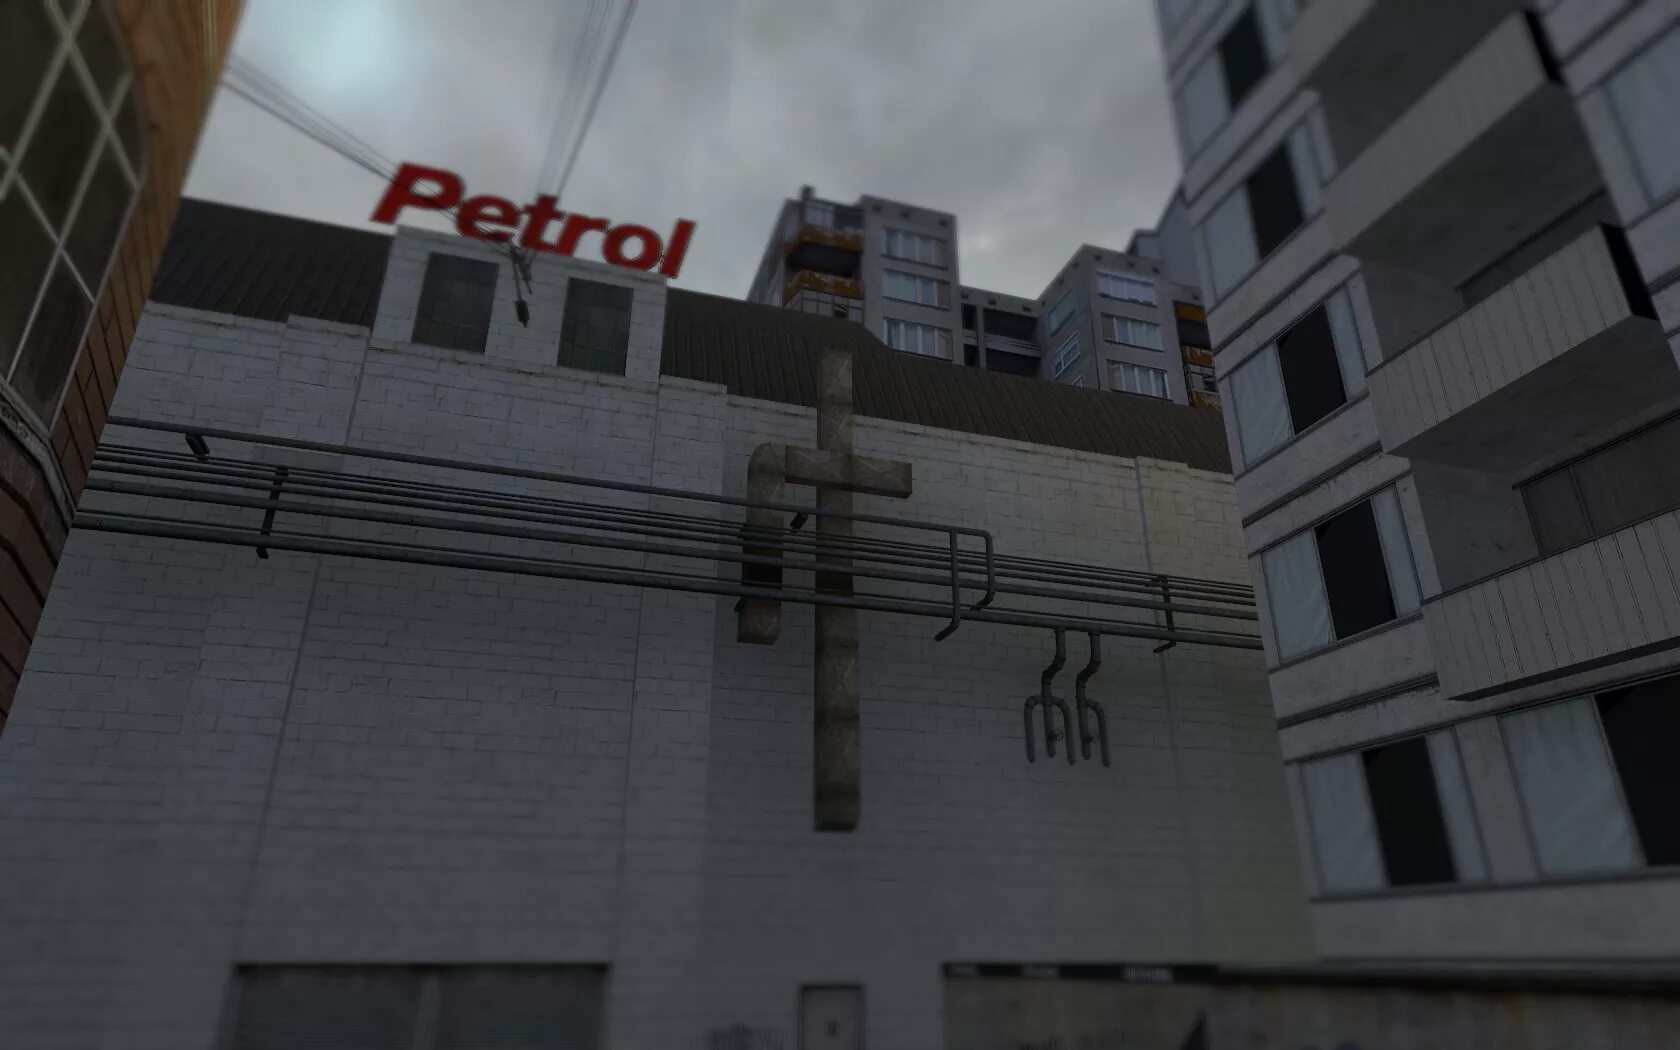 Half Life 2 карта Сити 17. Rp_city17 - build 210. Garry's Mod City 17 Map. Карта City 17 Roleplay.